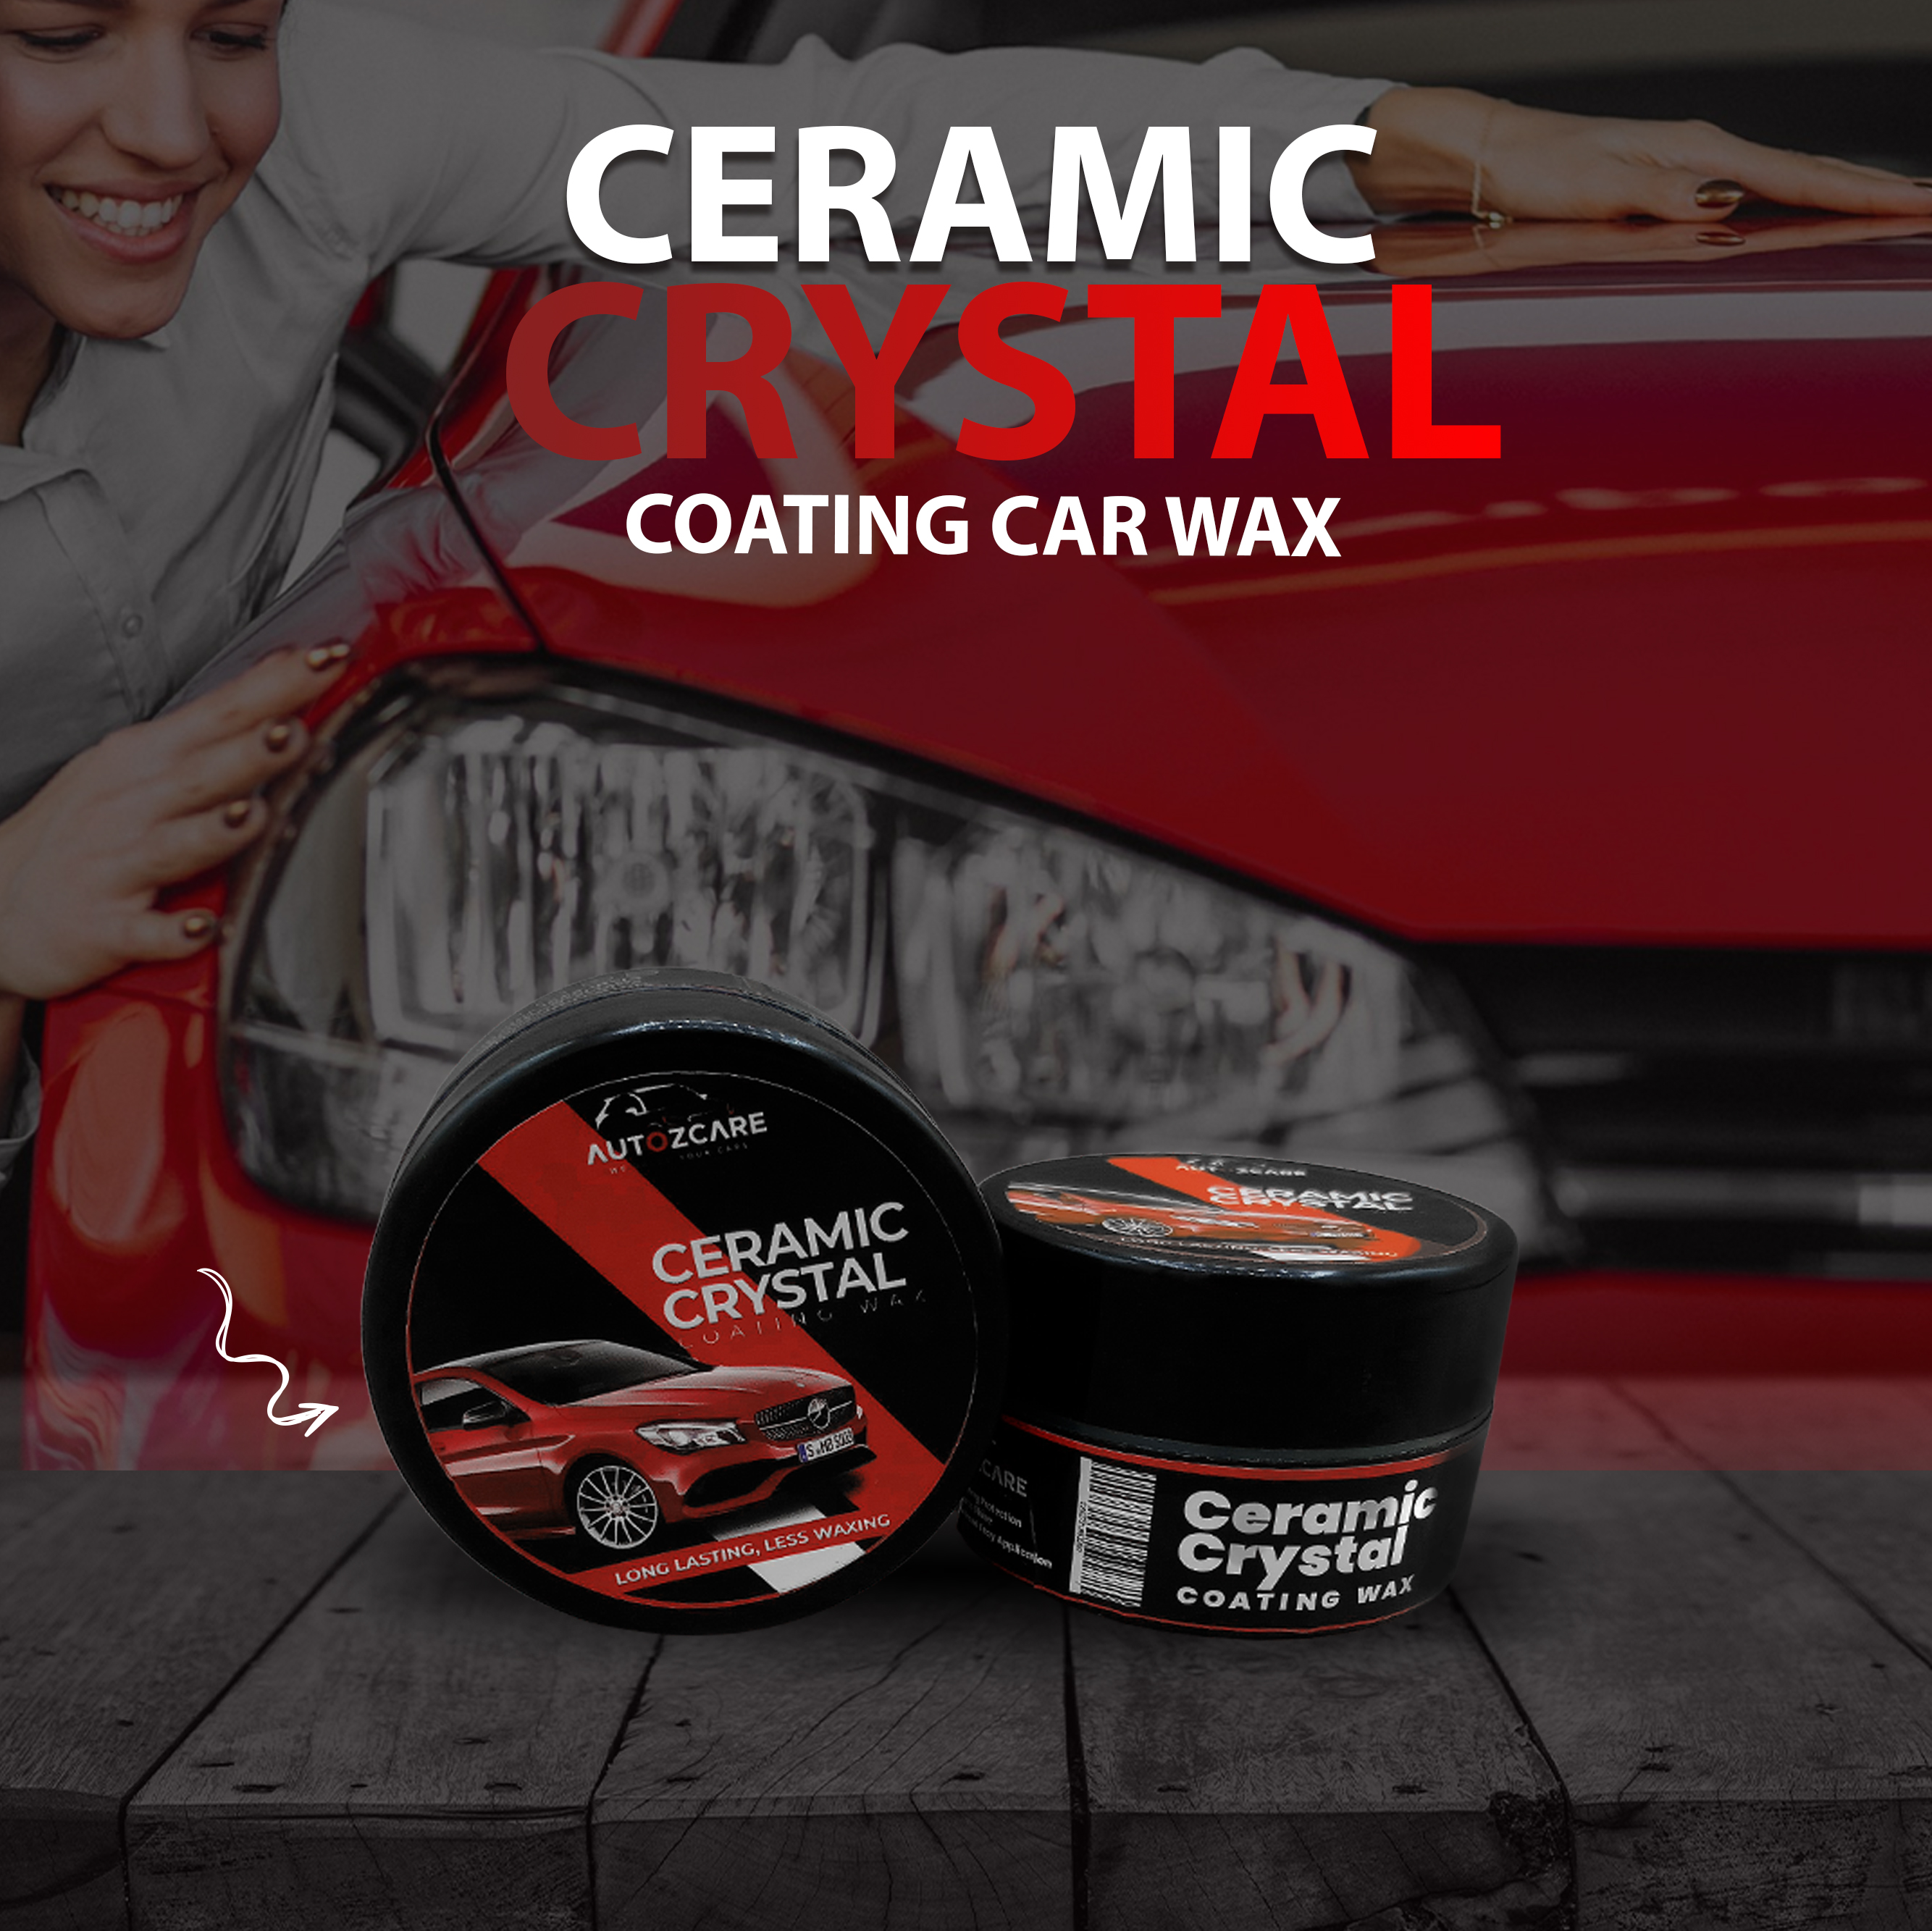 Ceramic Crystal Coating Car Wax